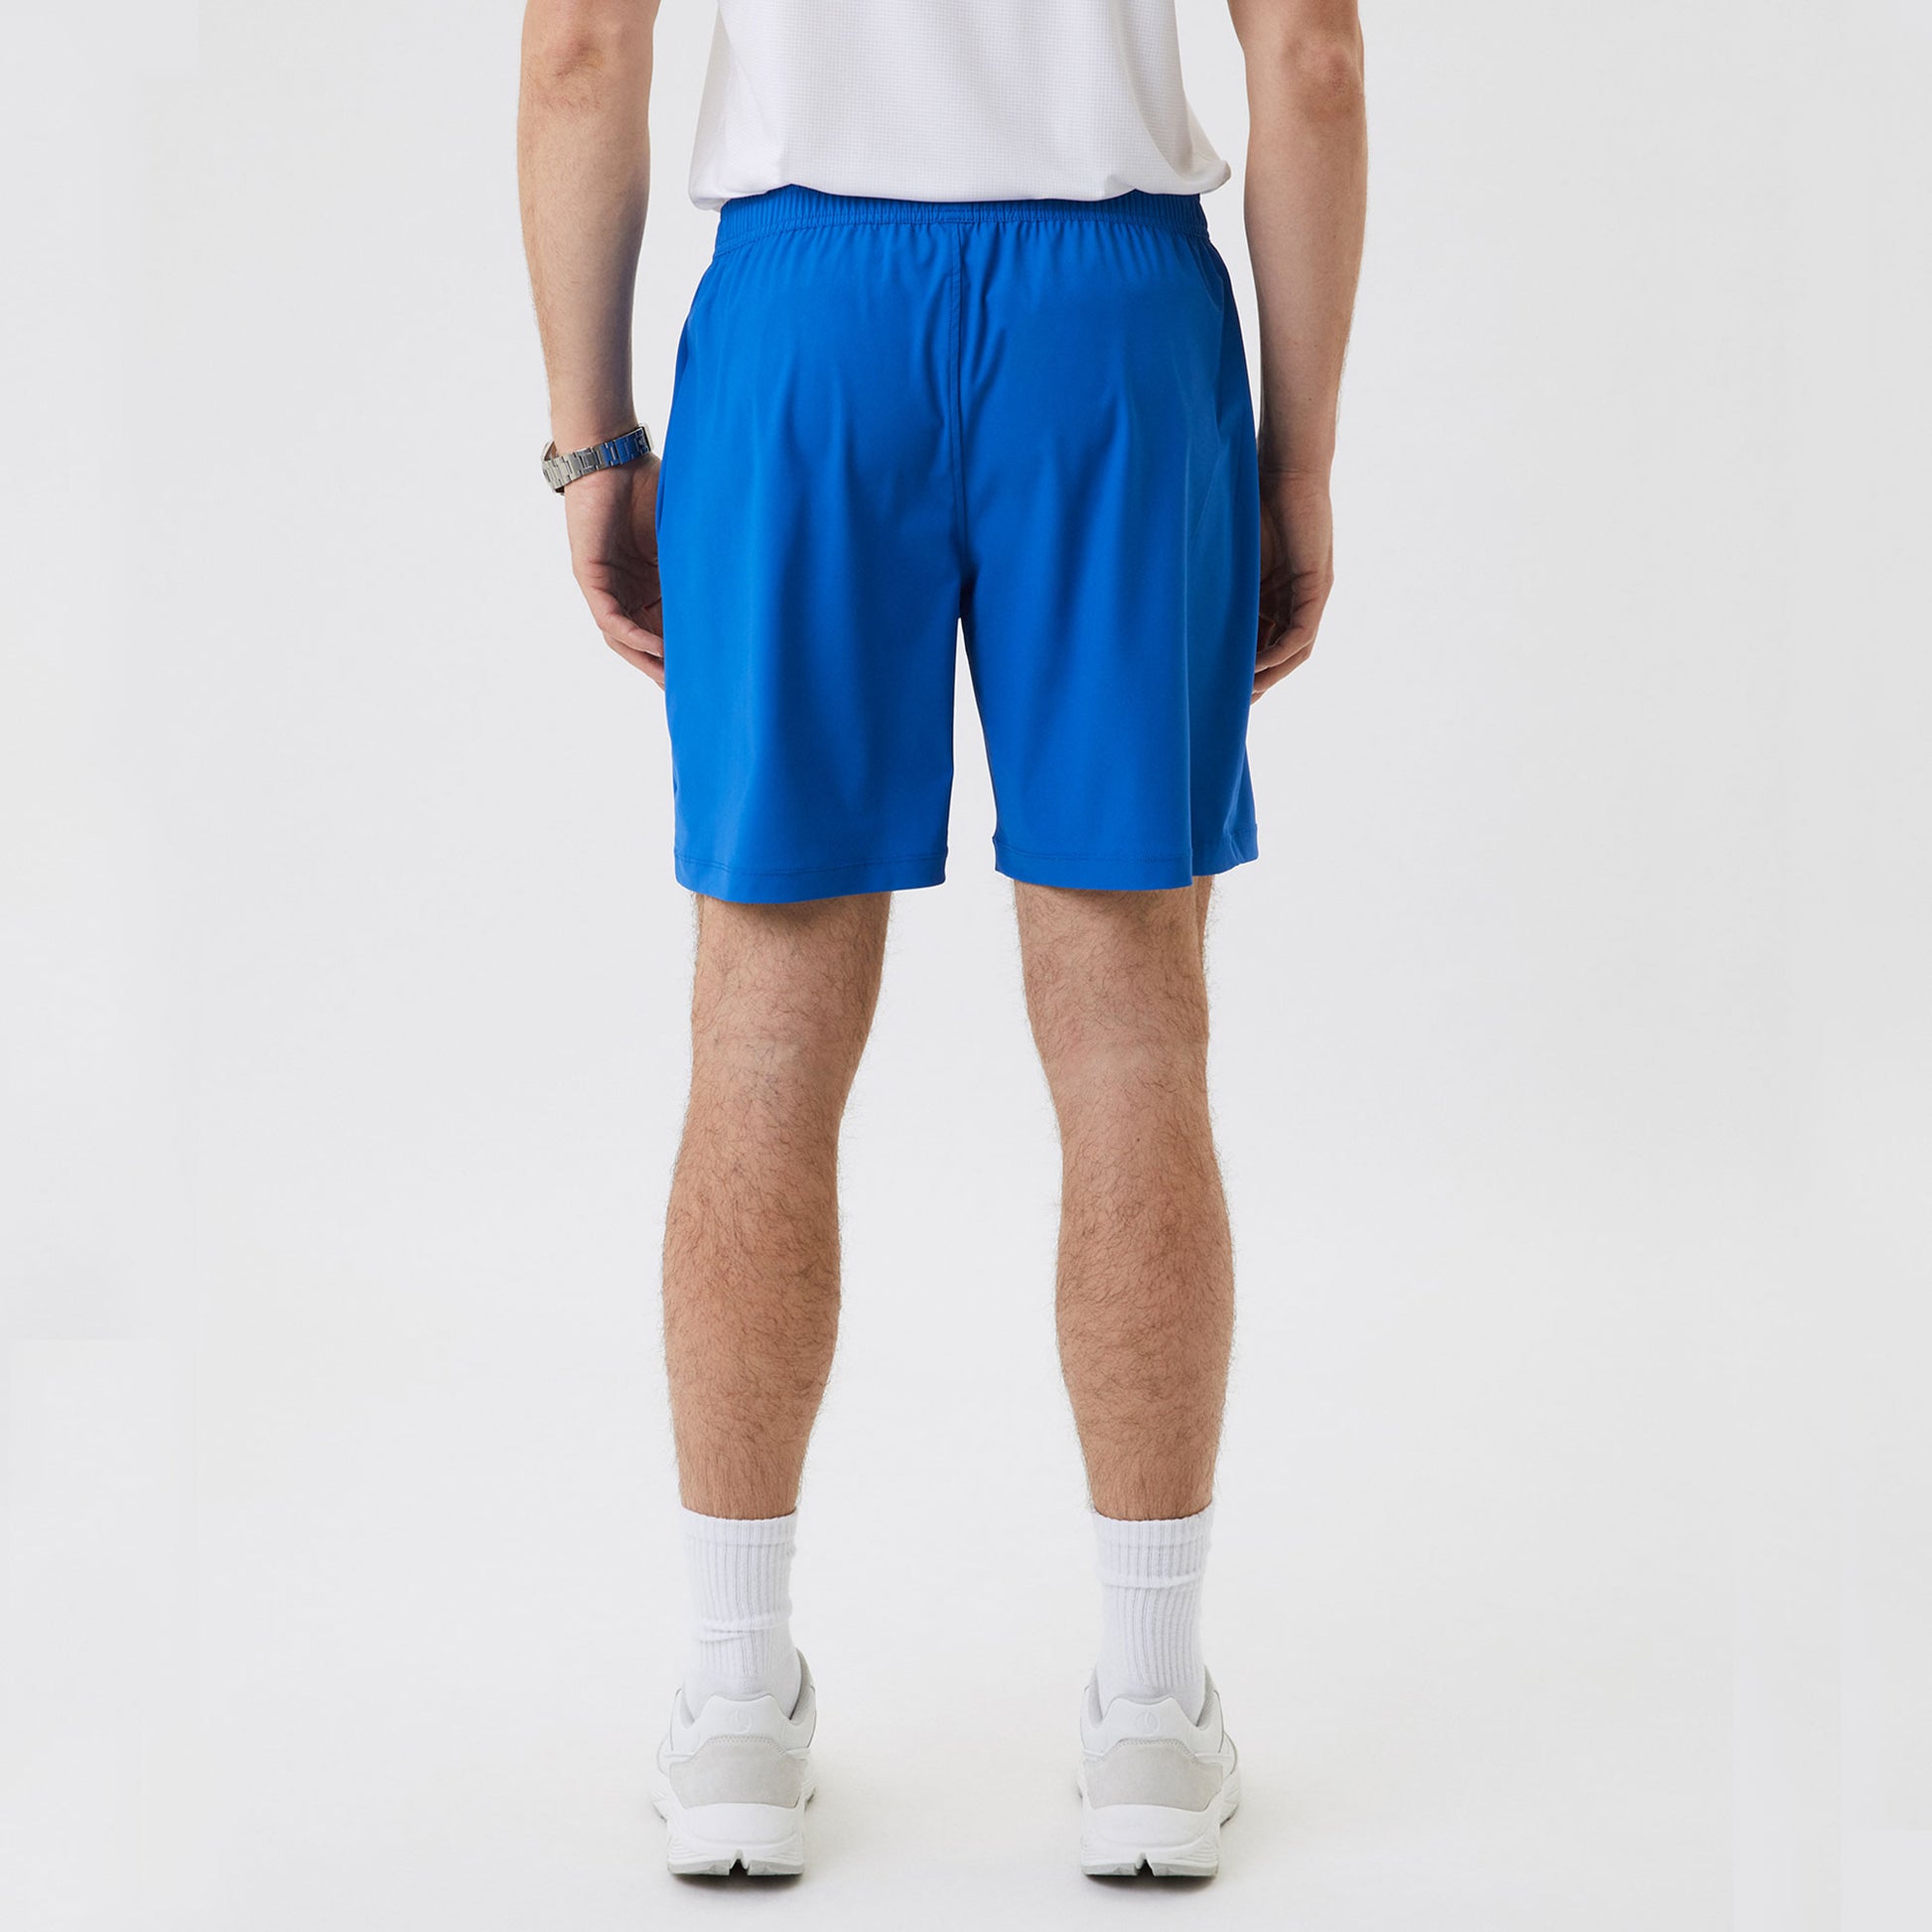 Björn Borg Ace Men's 9-Inch Tennis Shorts Blue (2)